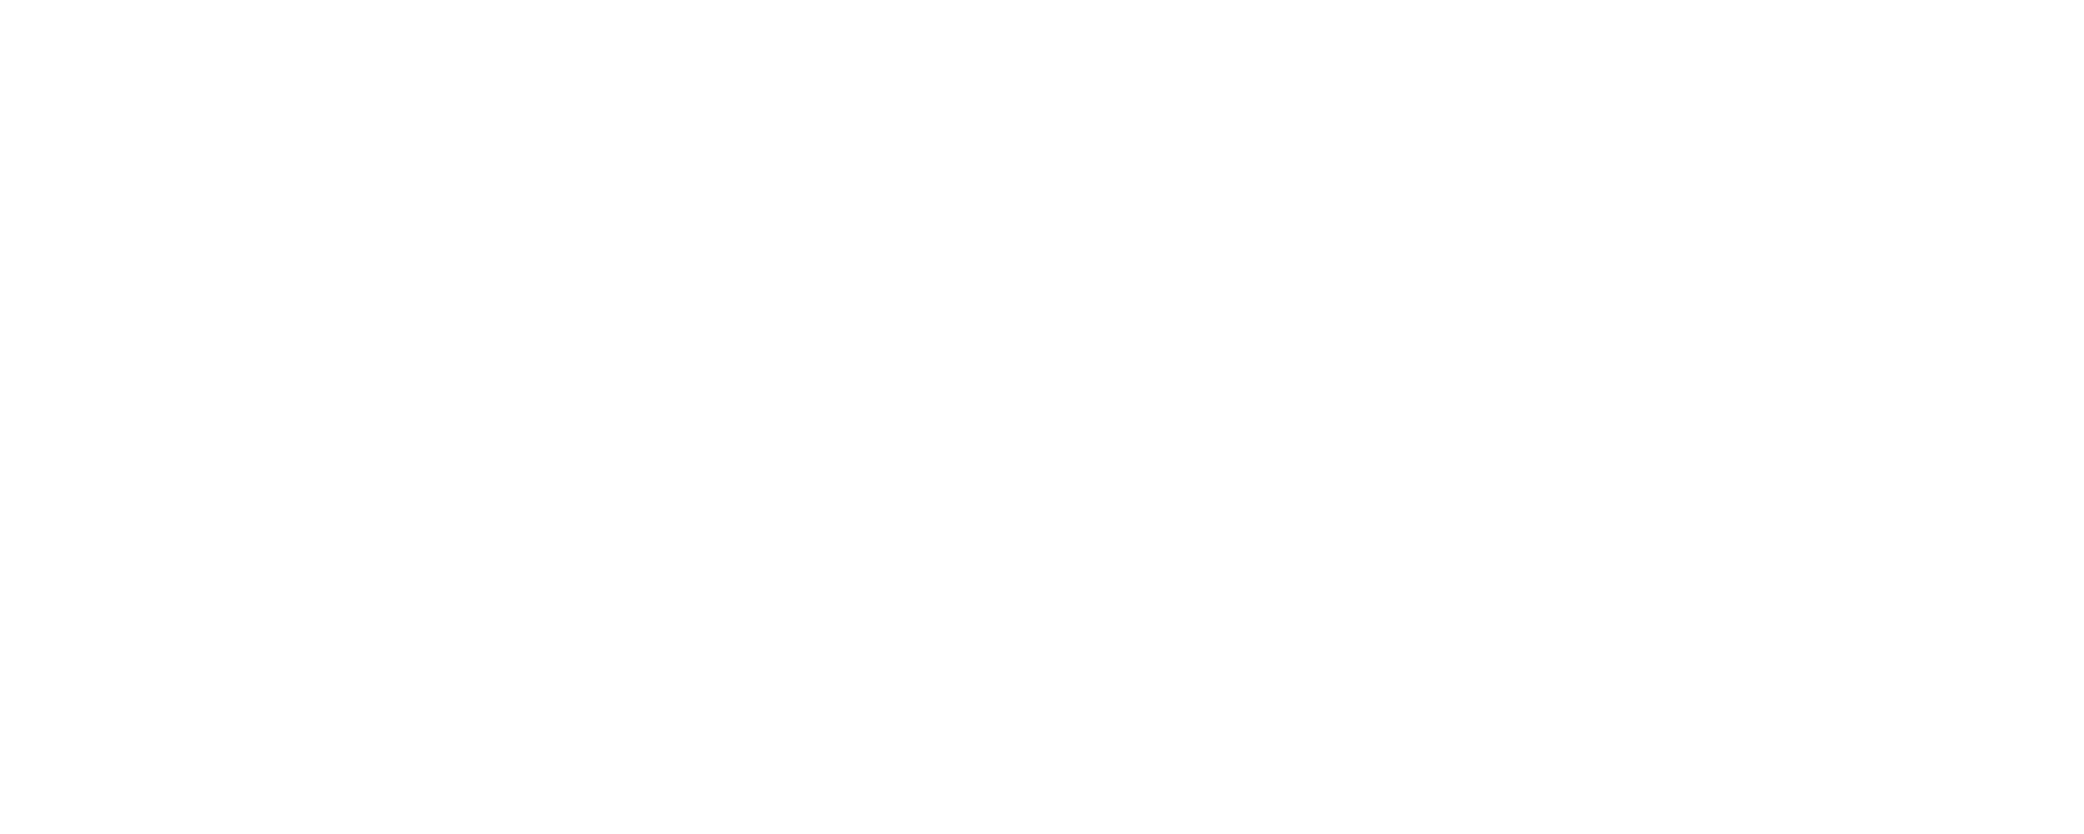 Cemex White 3 logo